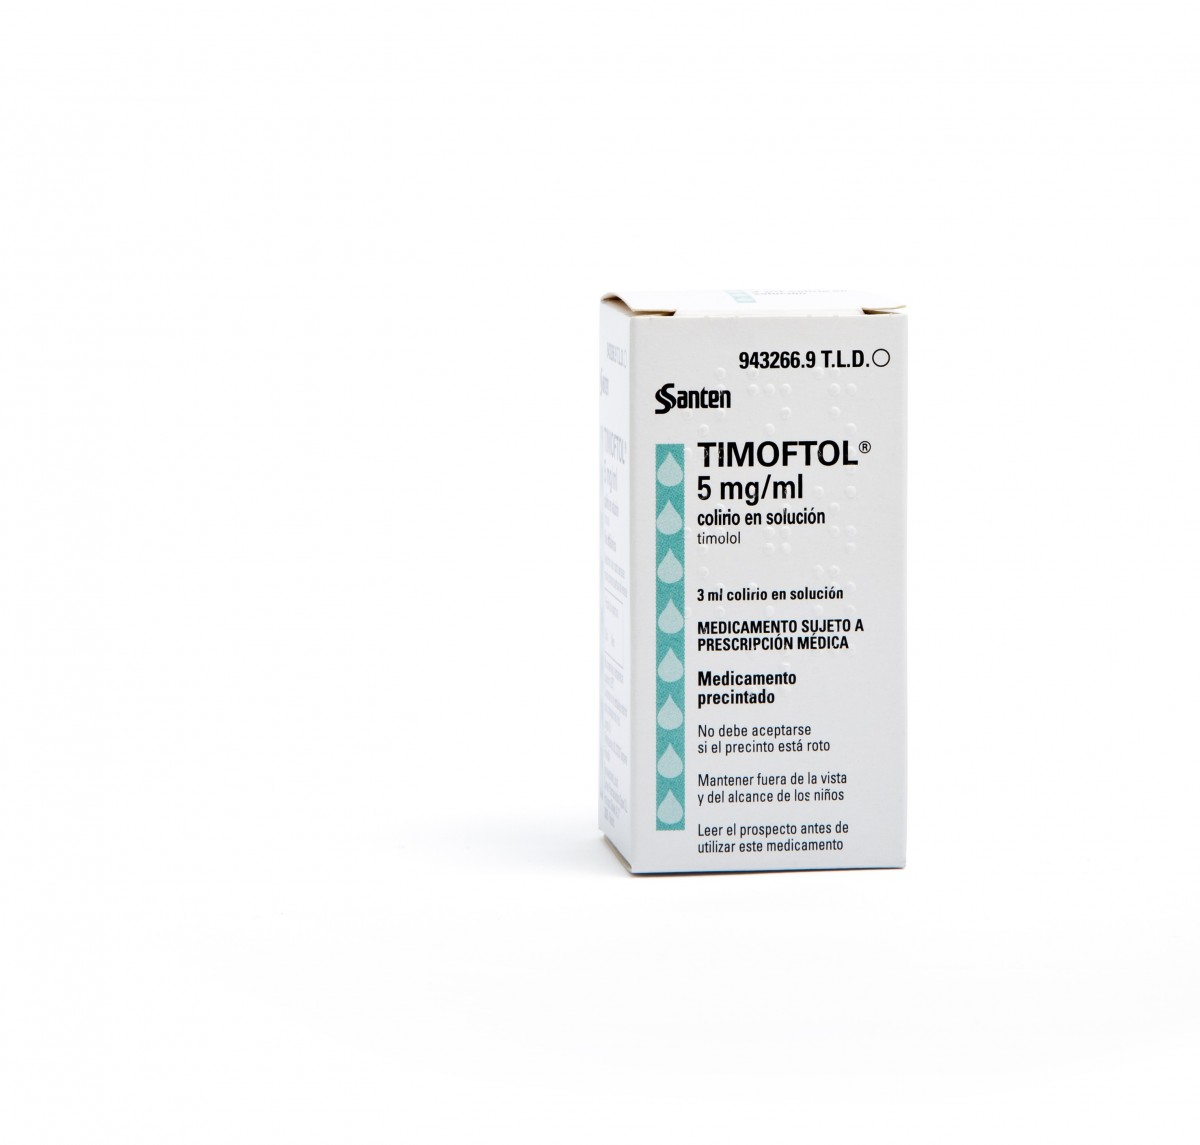 TIMOFTOL 5 mg/ml COLIRIO EN SOLUCION , 1 frasco de 3 ml fotografía del envase.